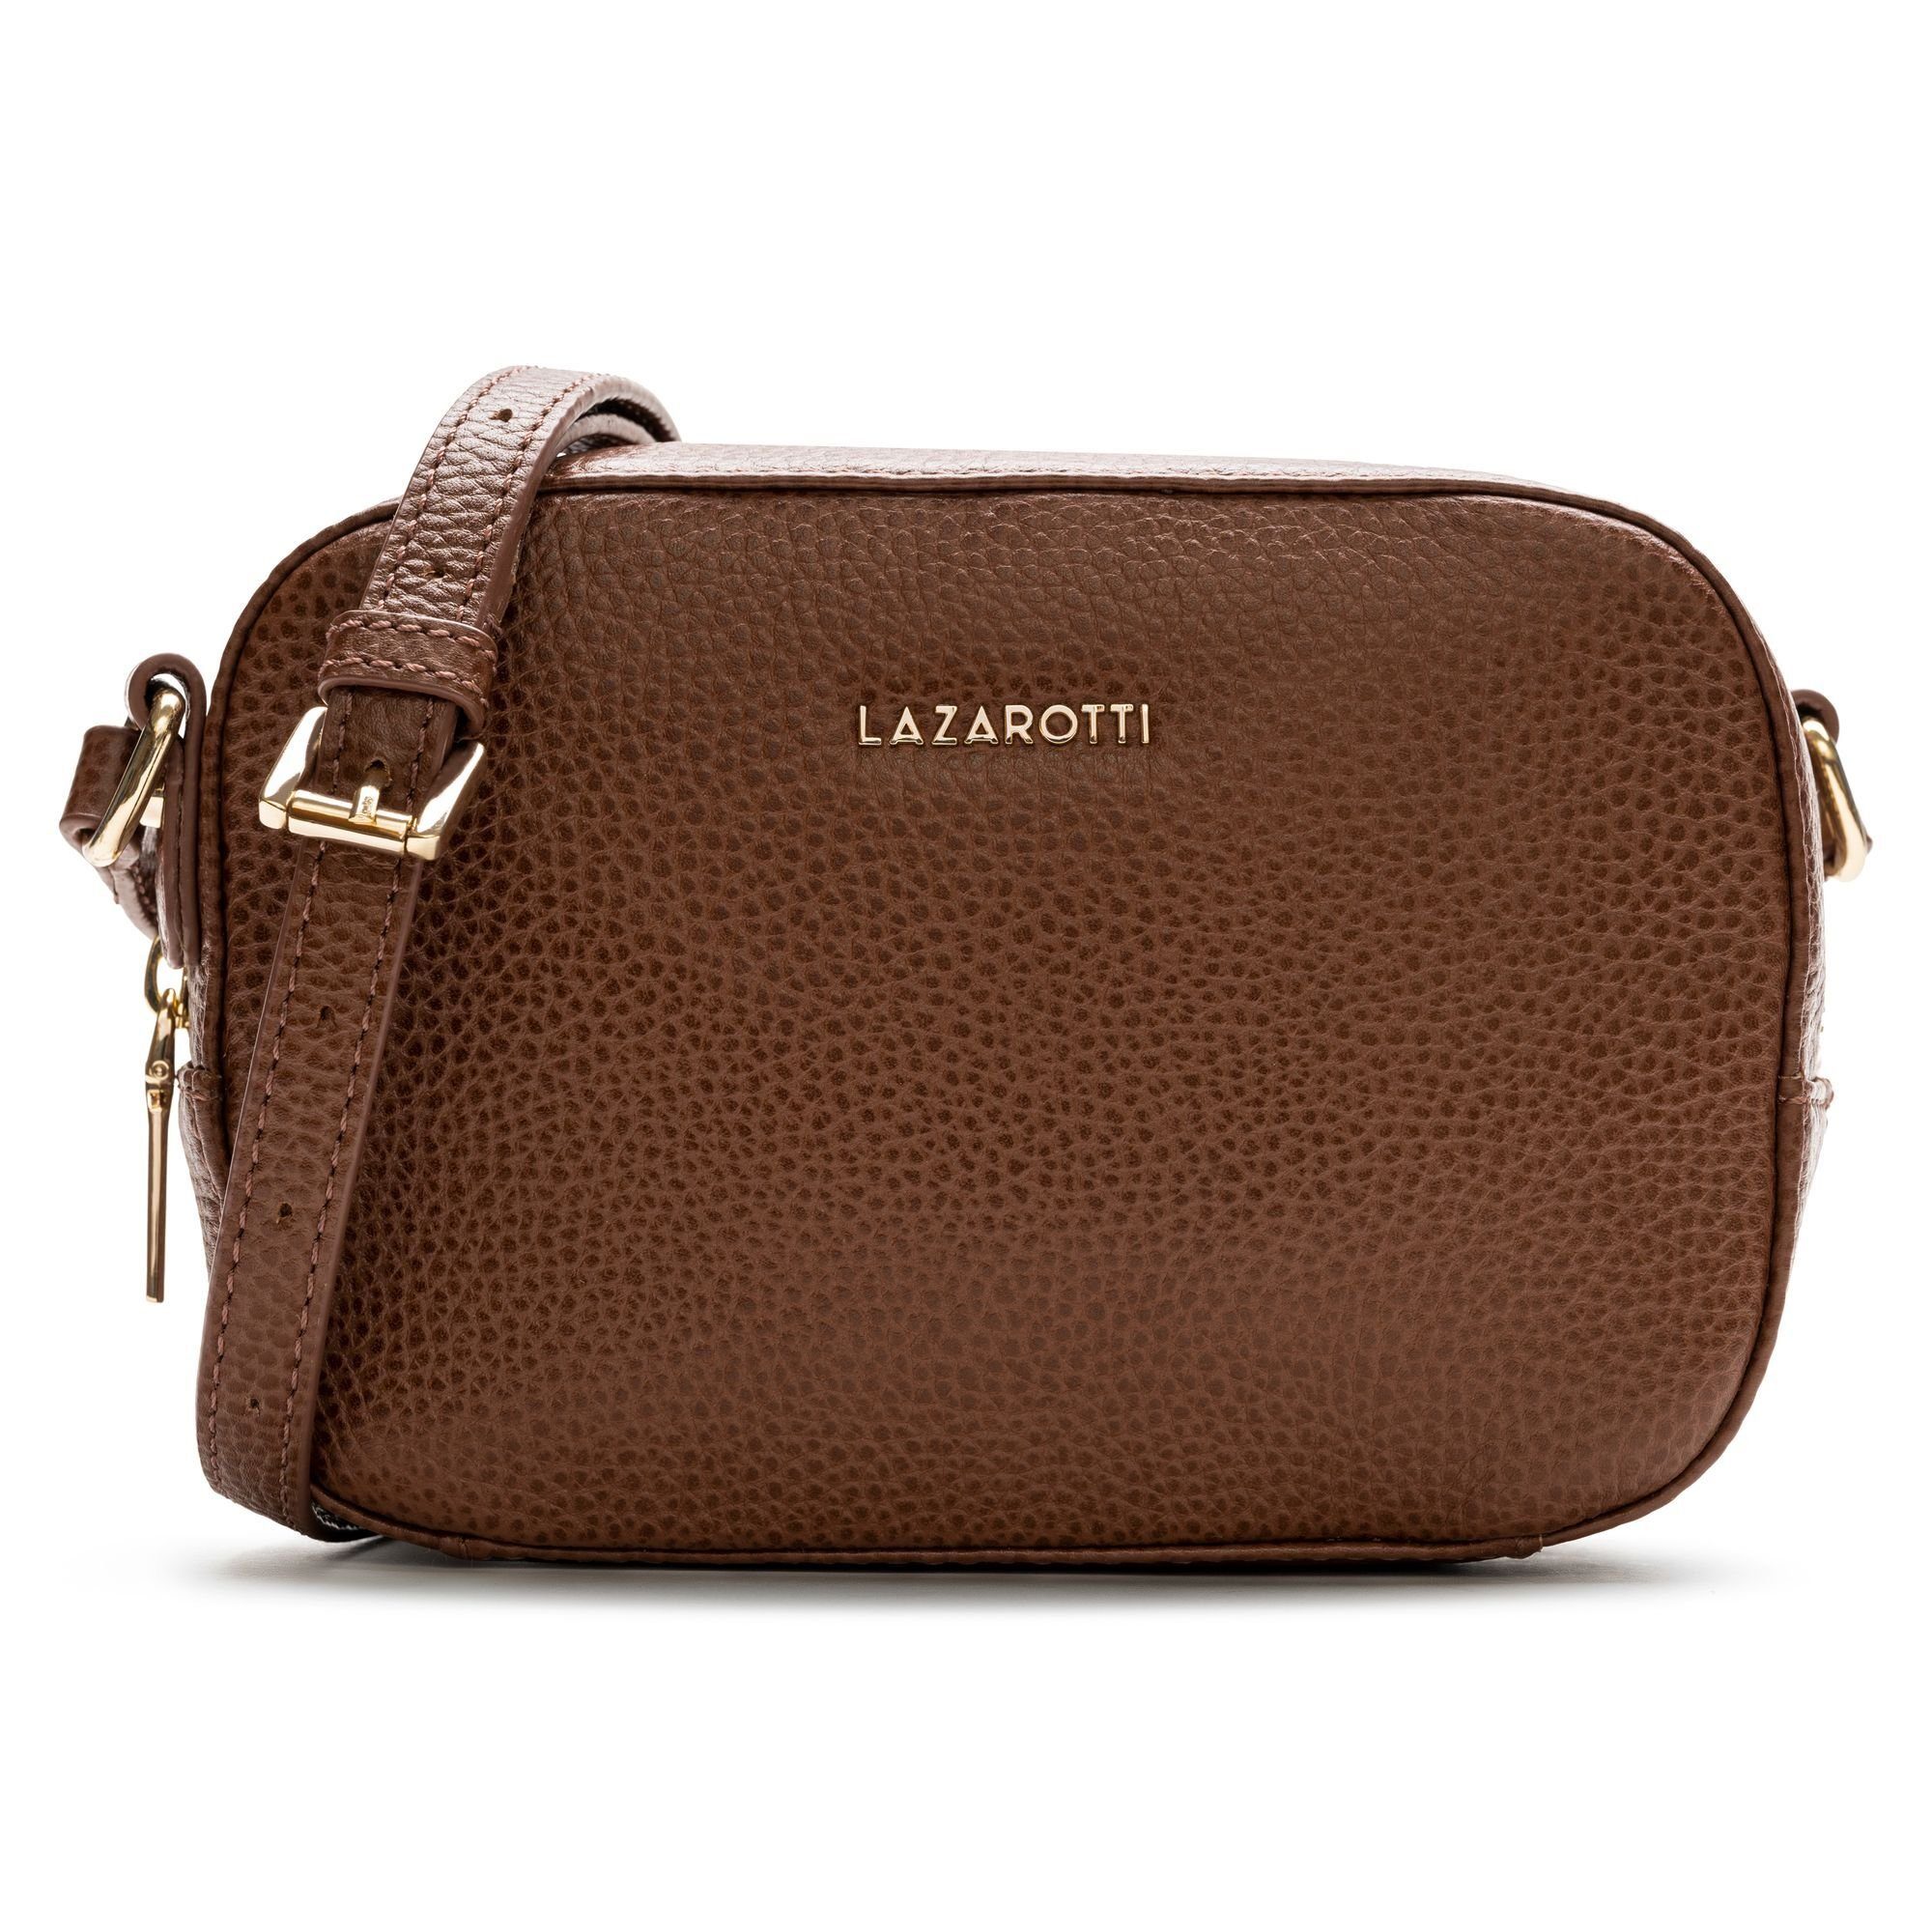 Leather, Leder brown Lazarotti Bologna Umhängetasche